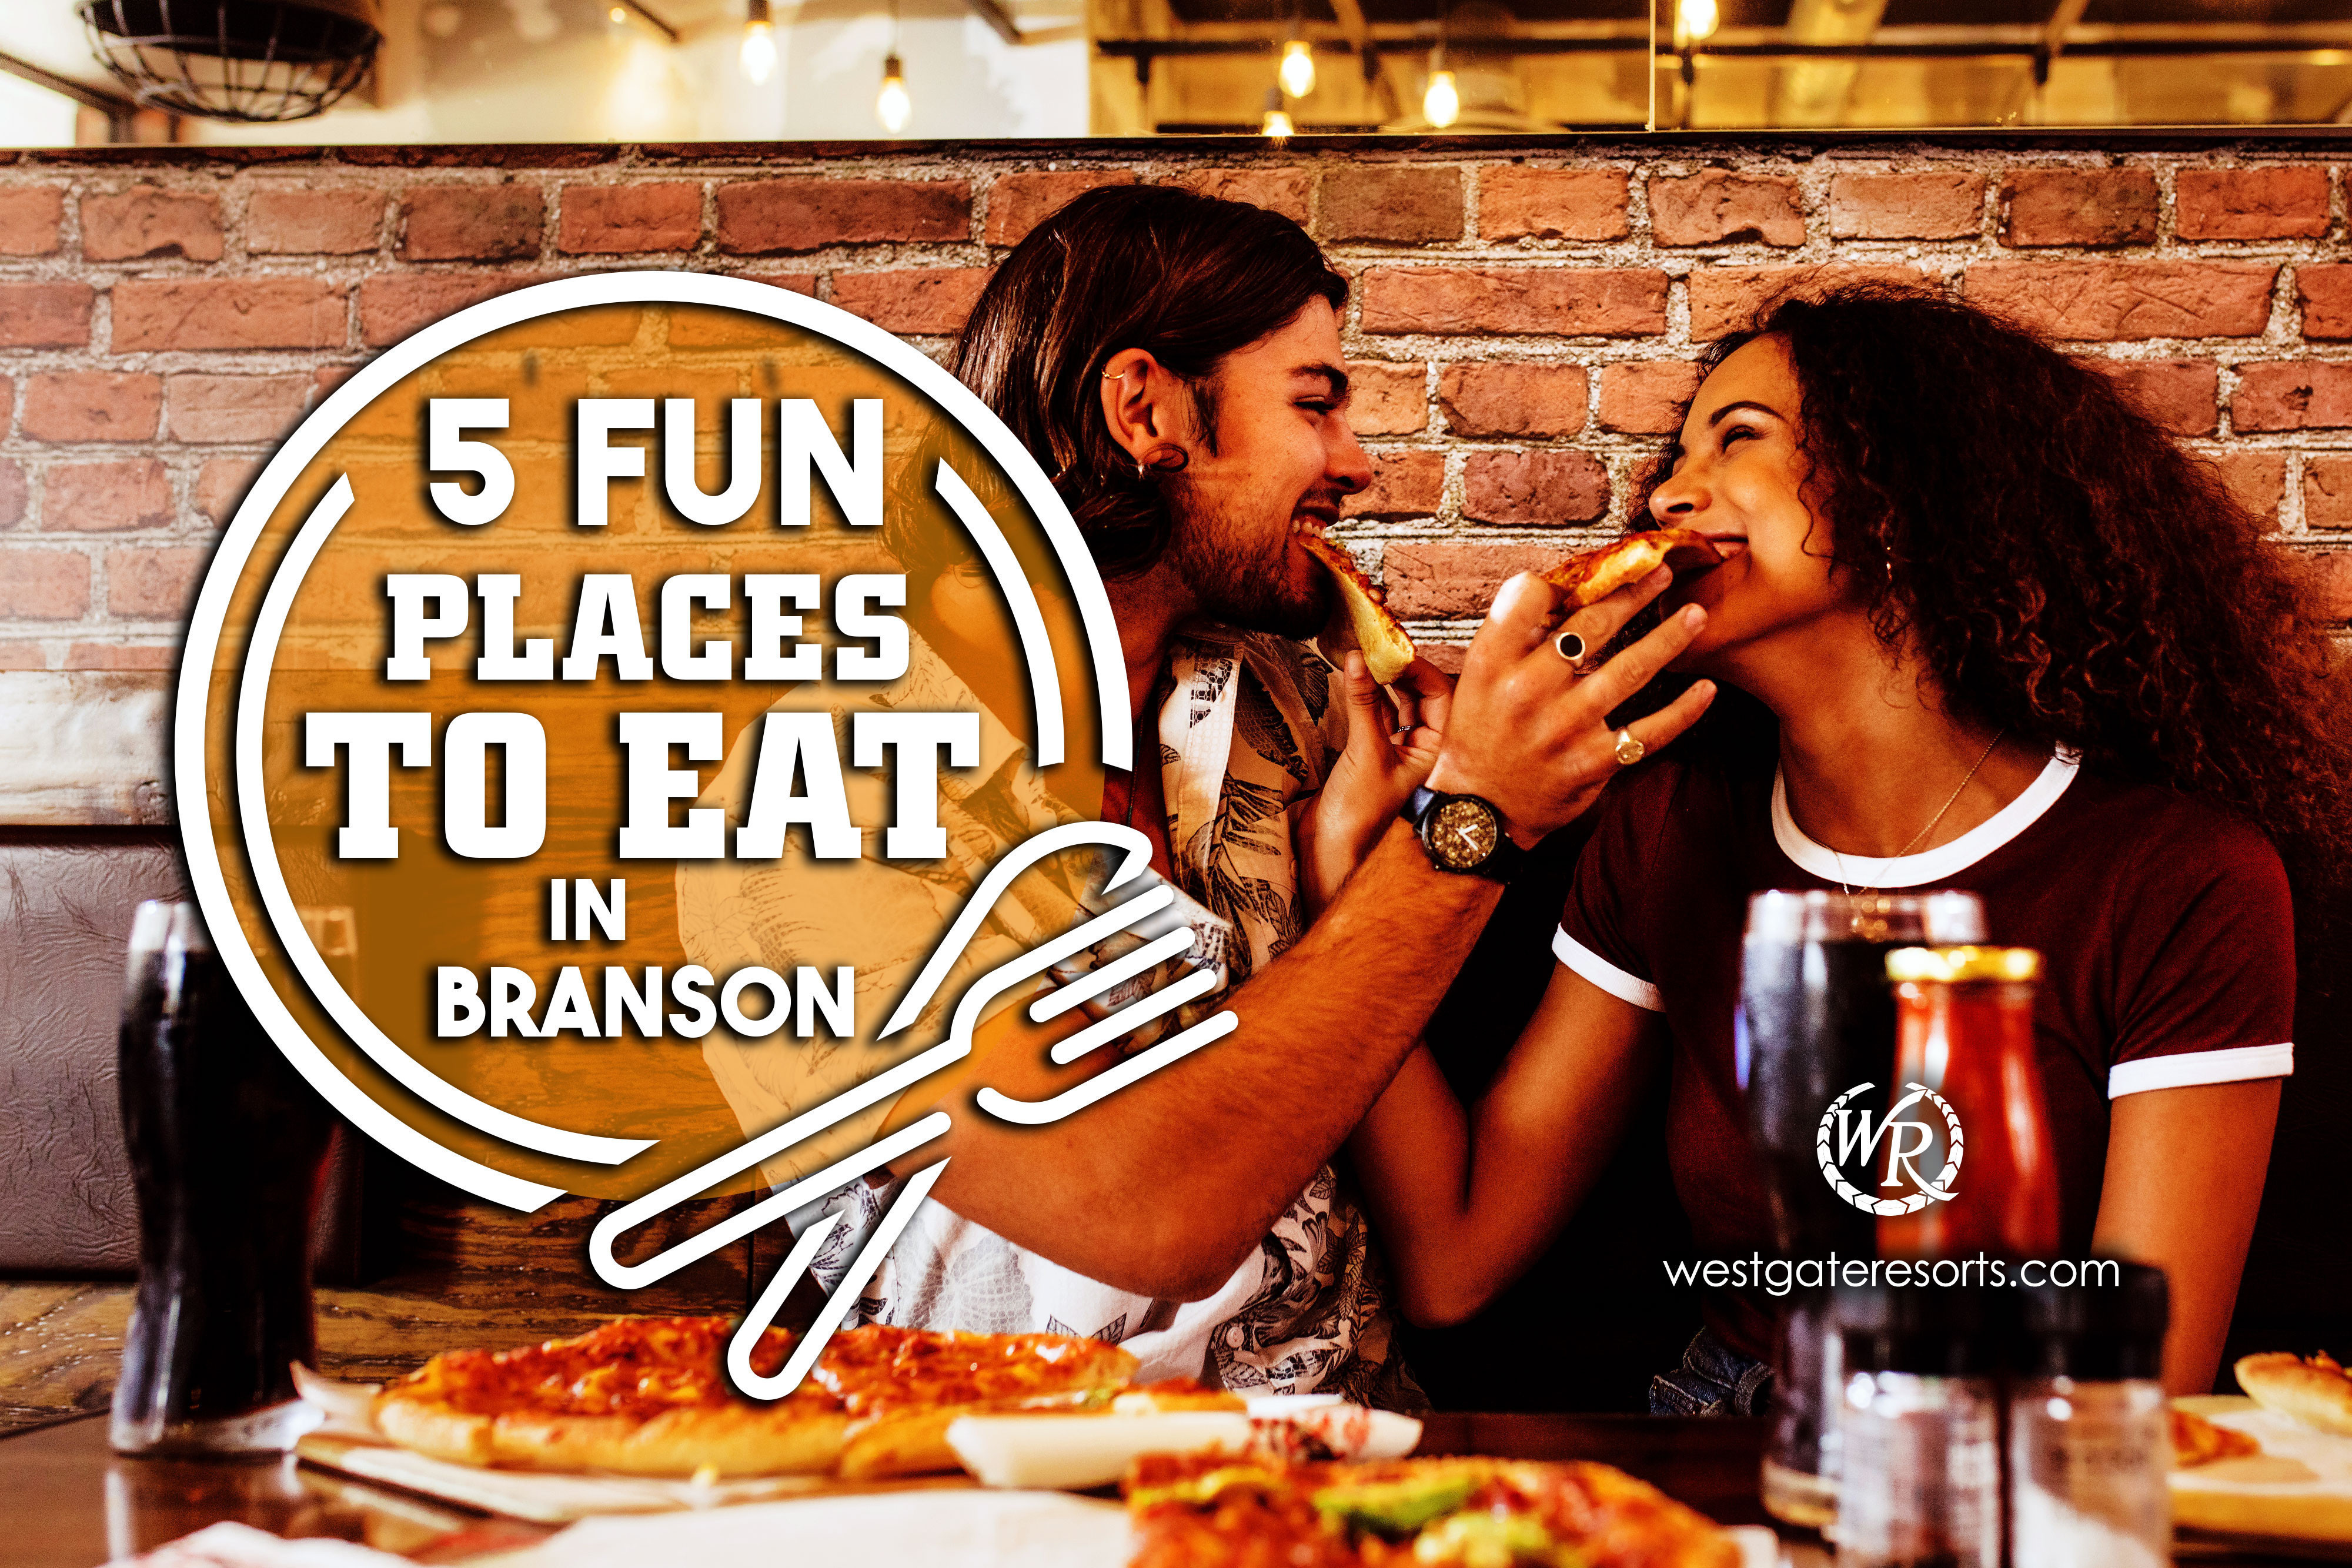 Hero - 5 Fun Places To Eat in Branson, MO